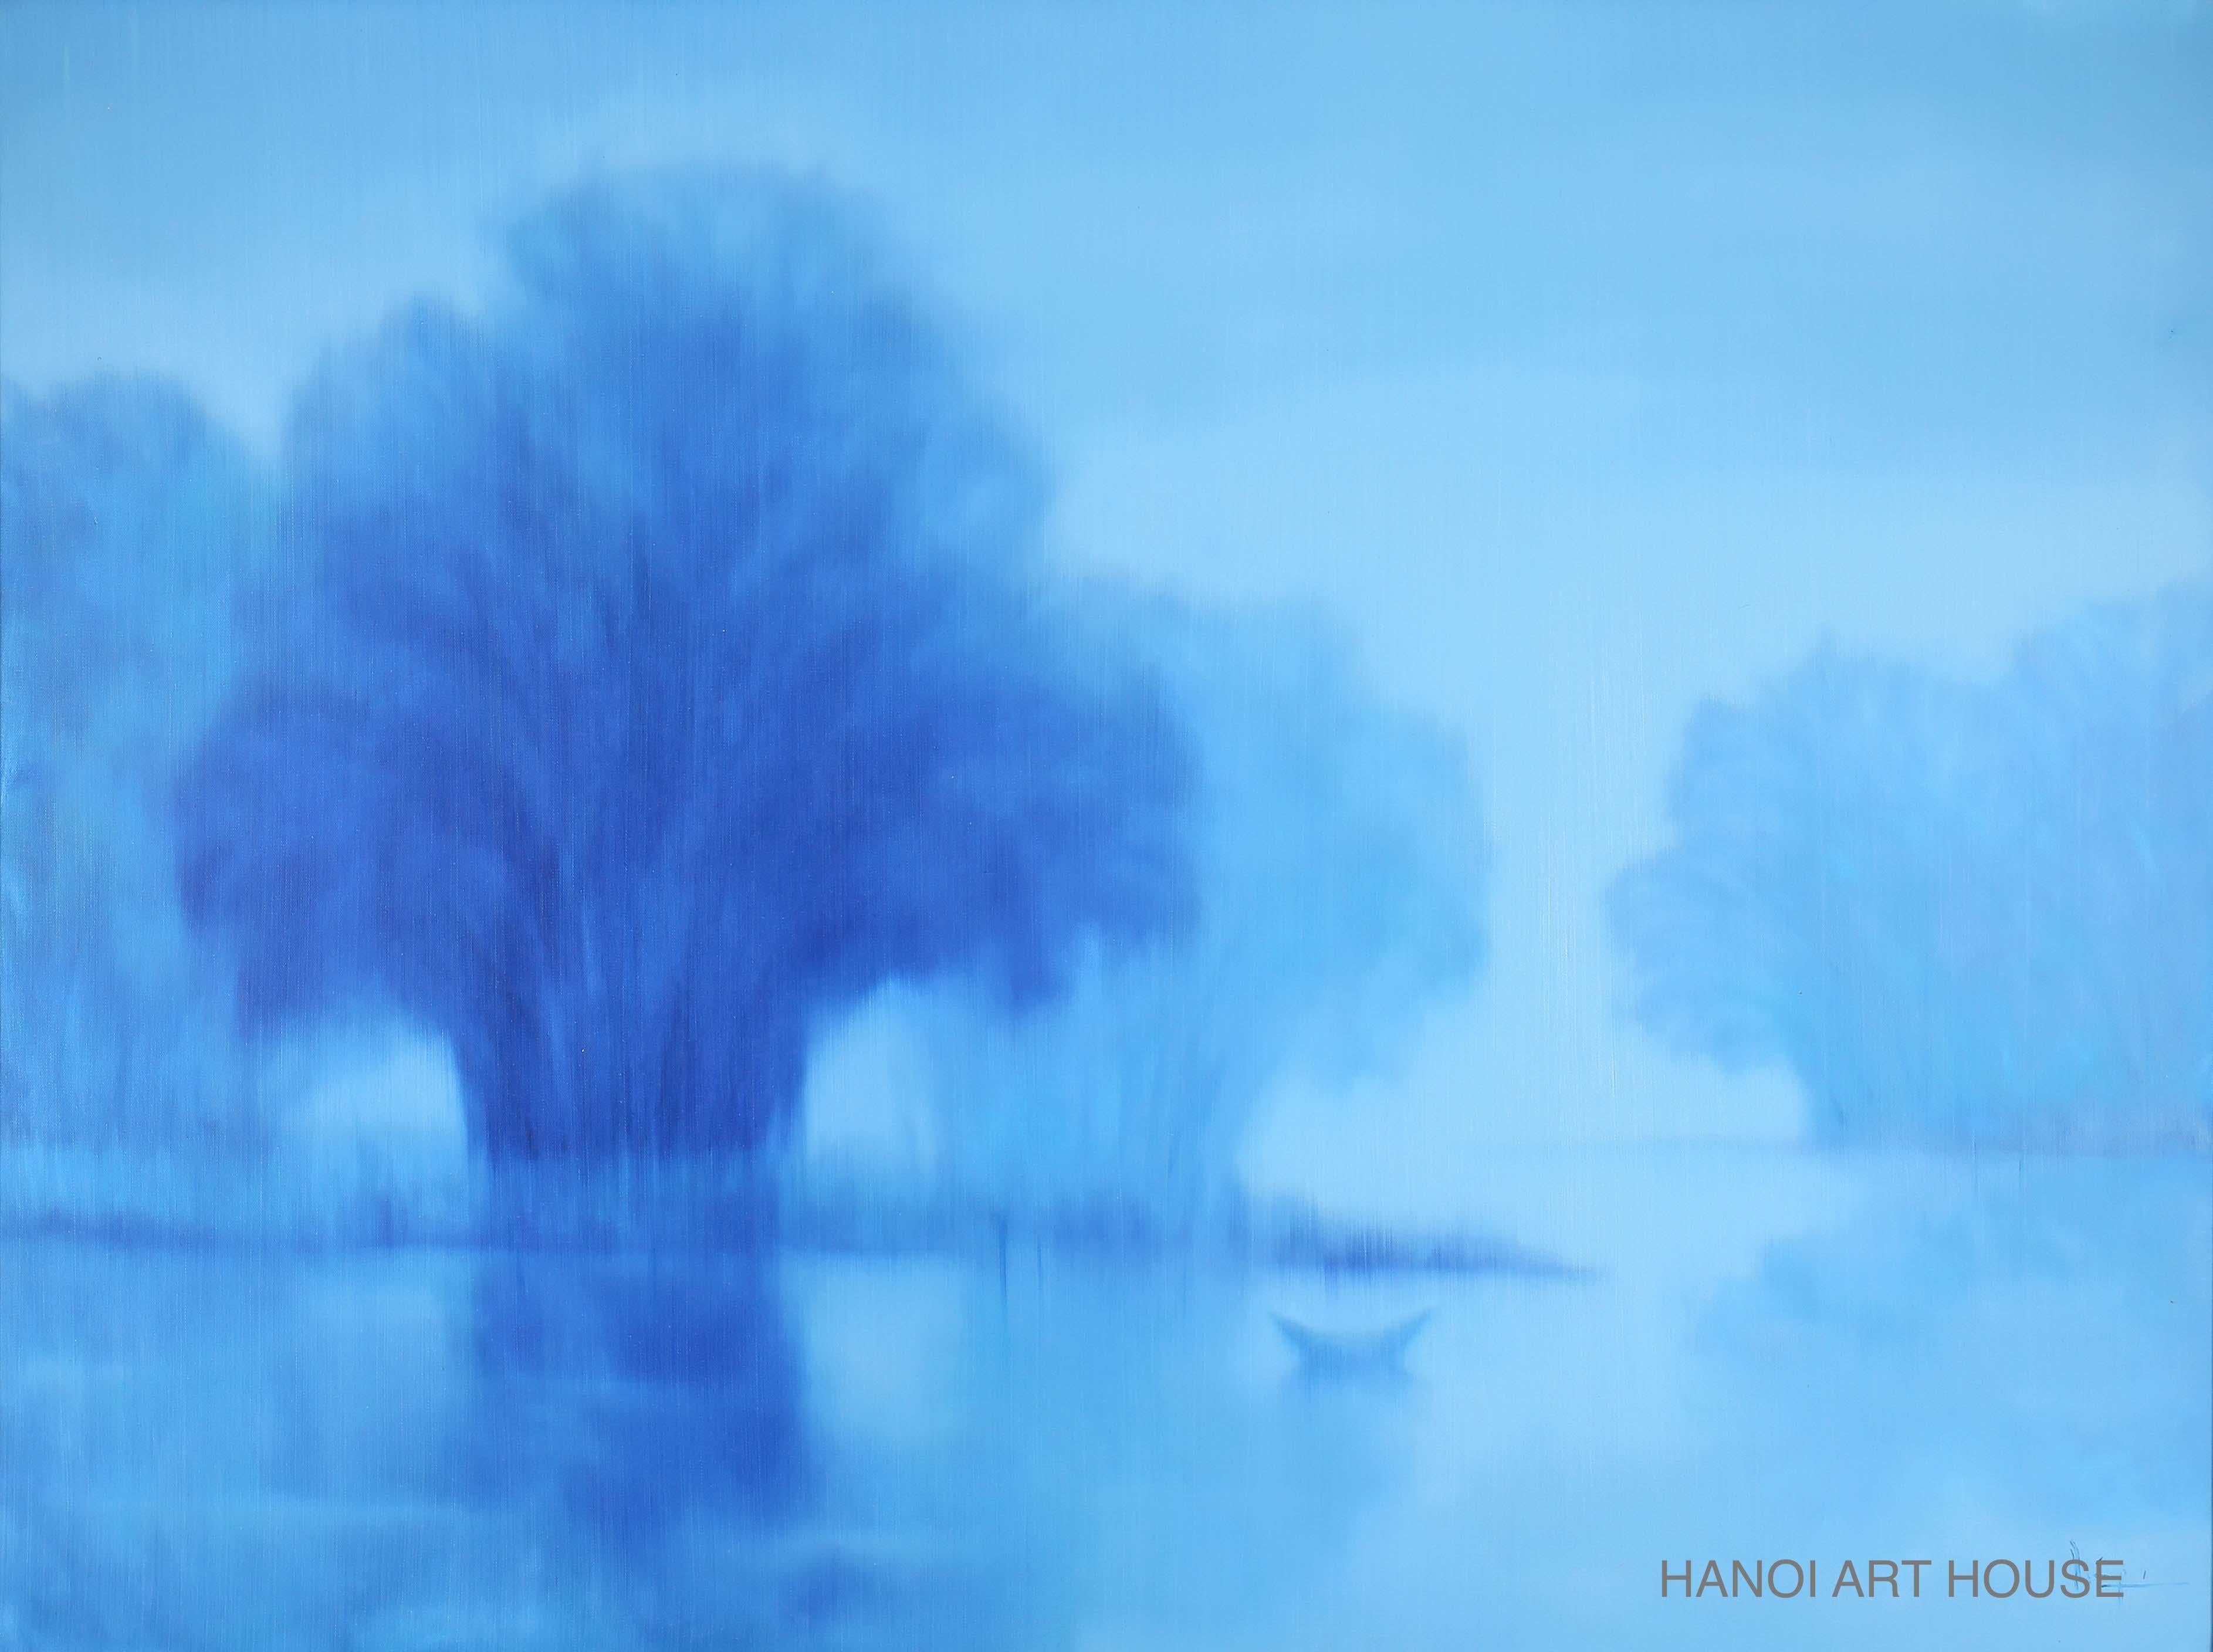 Hoang Duc Dzung Interior Painting - "Blue Sunlight" 21st century Asian landscape oil painting misty blue 